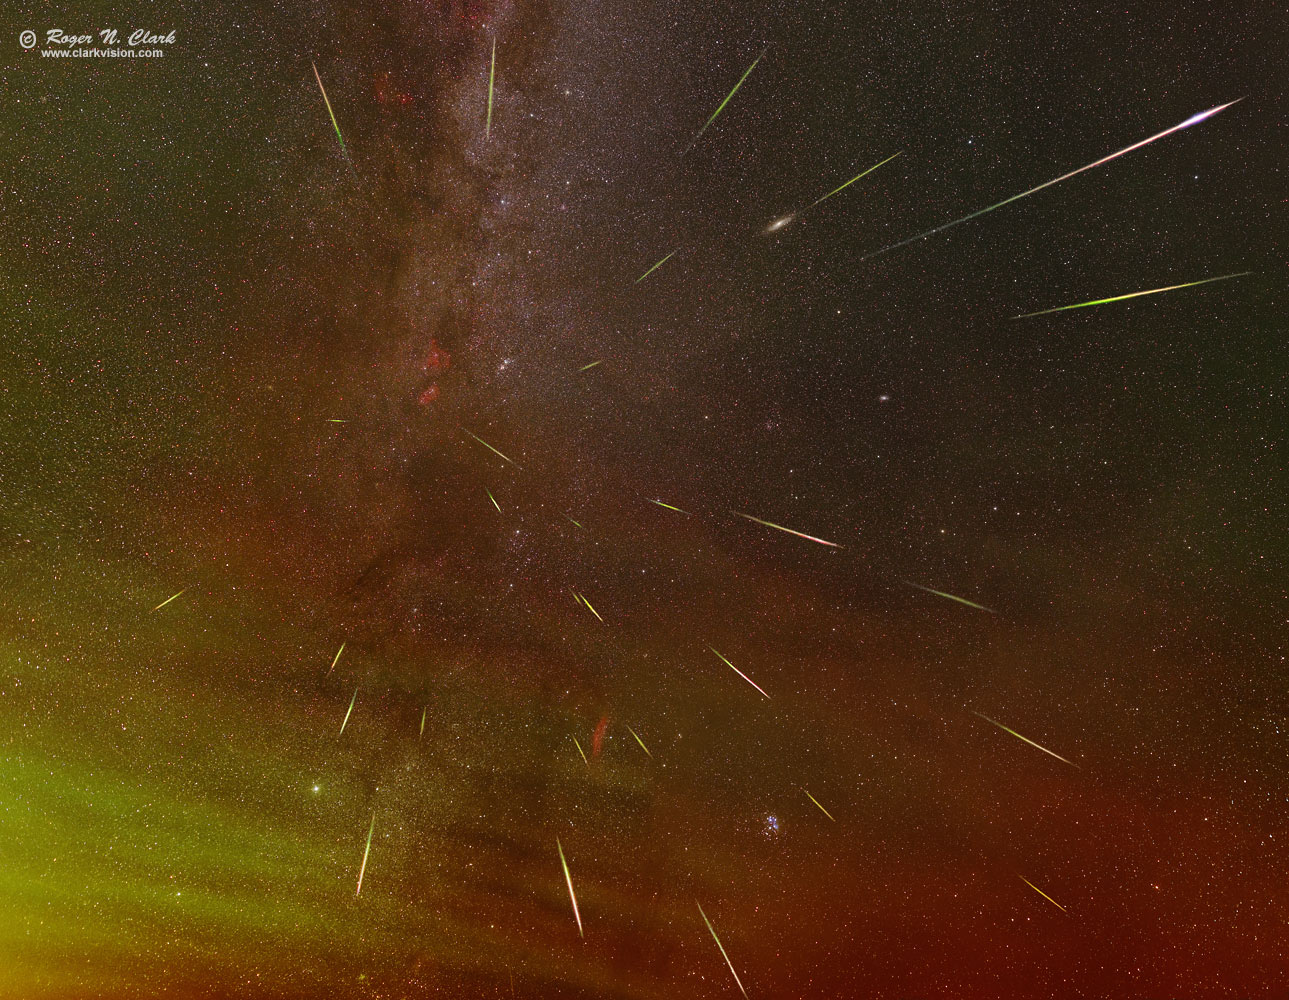 image perseid-meteor-shower2015_21-panelmosaic-t2b.j-c1sky.jpg is Copyrighted by Roger N. Clark, www.clarkvision.com